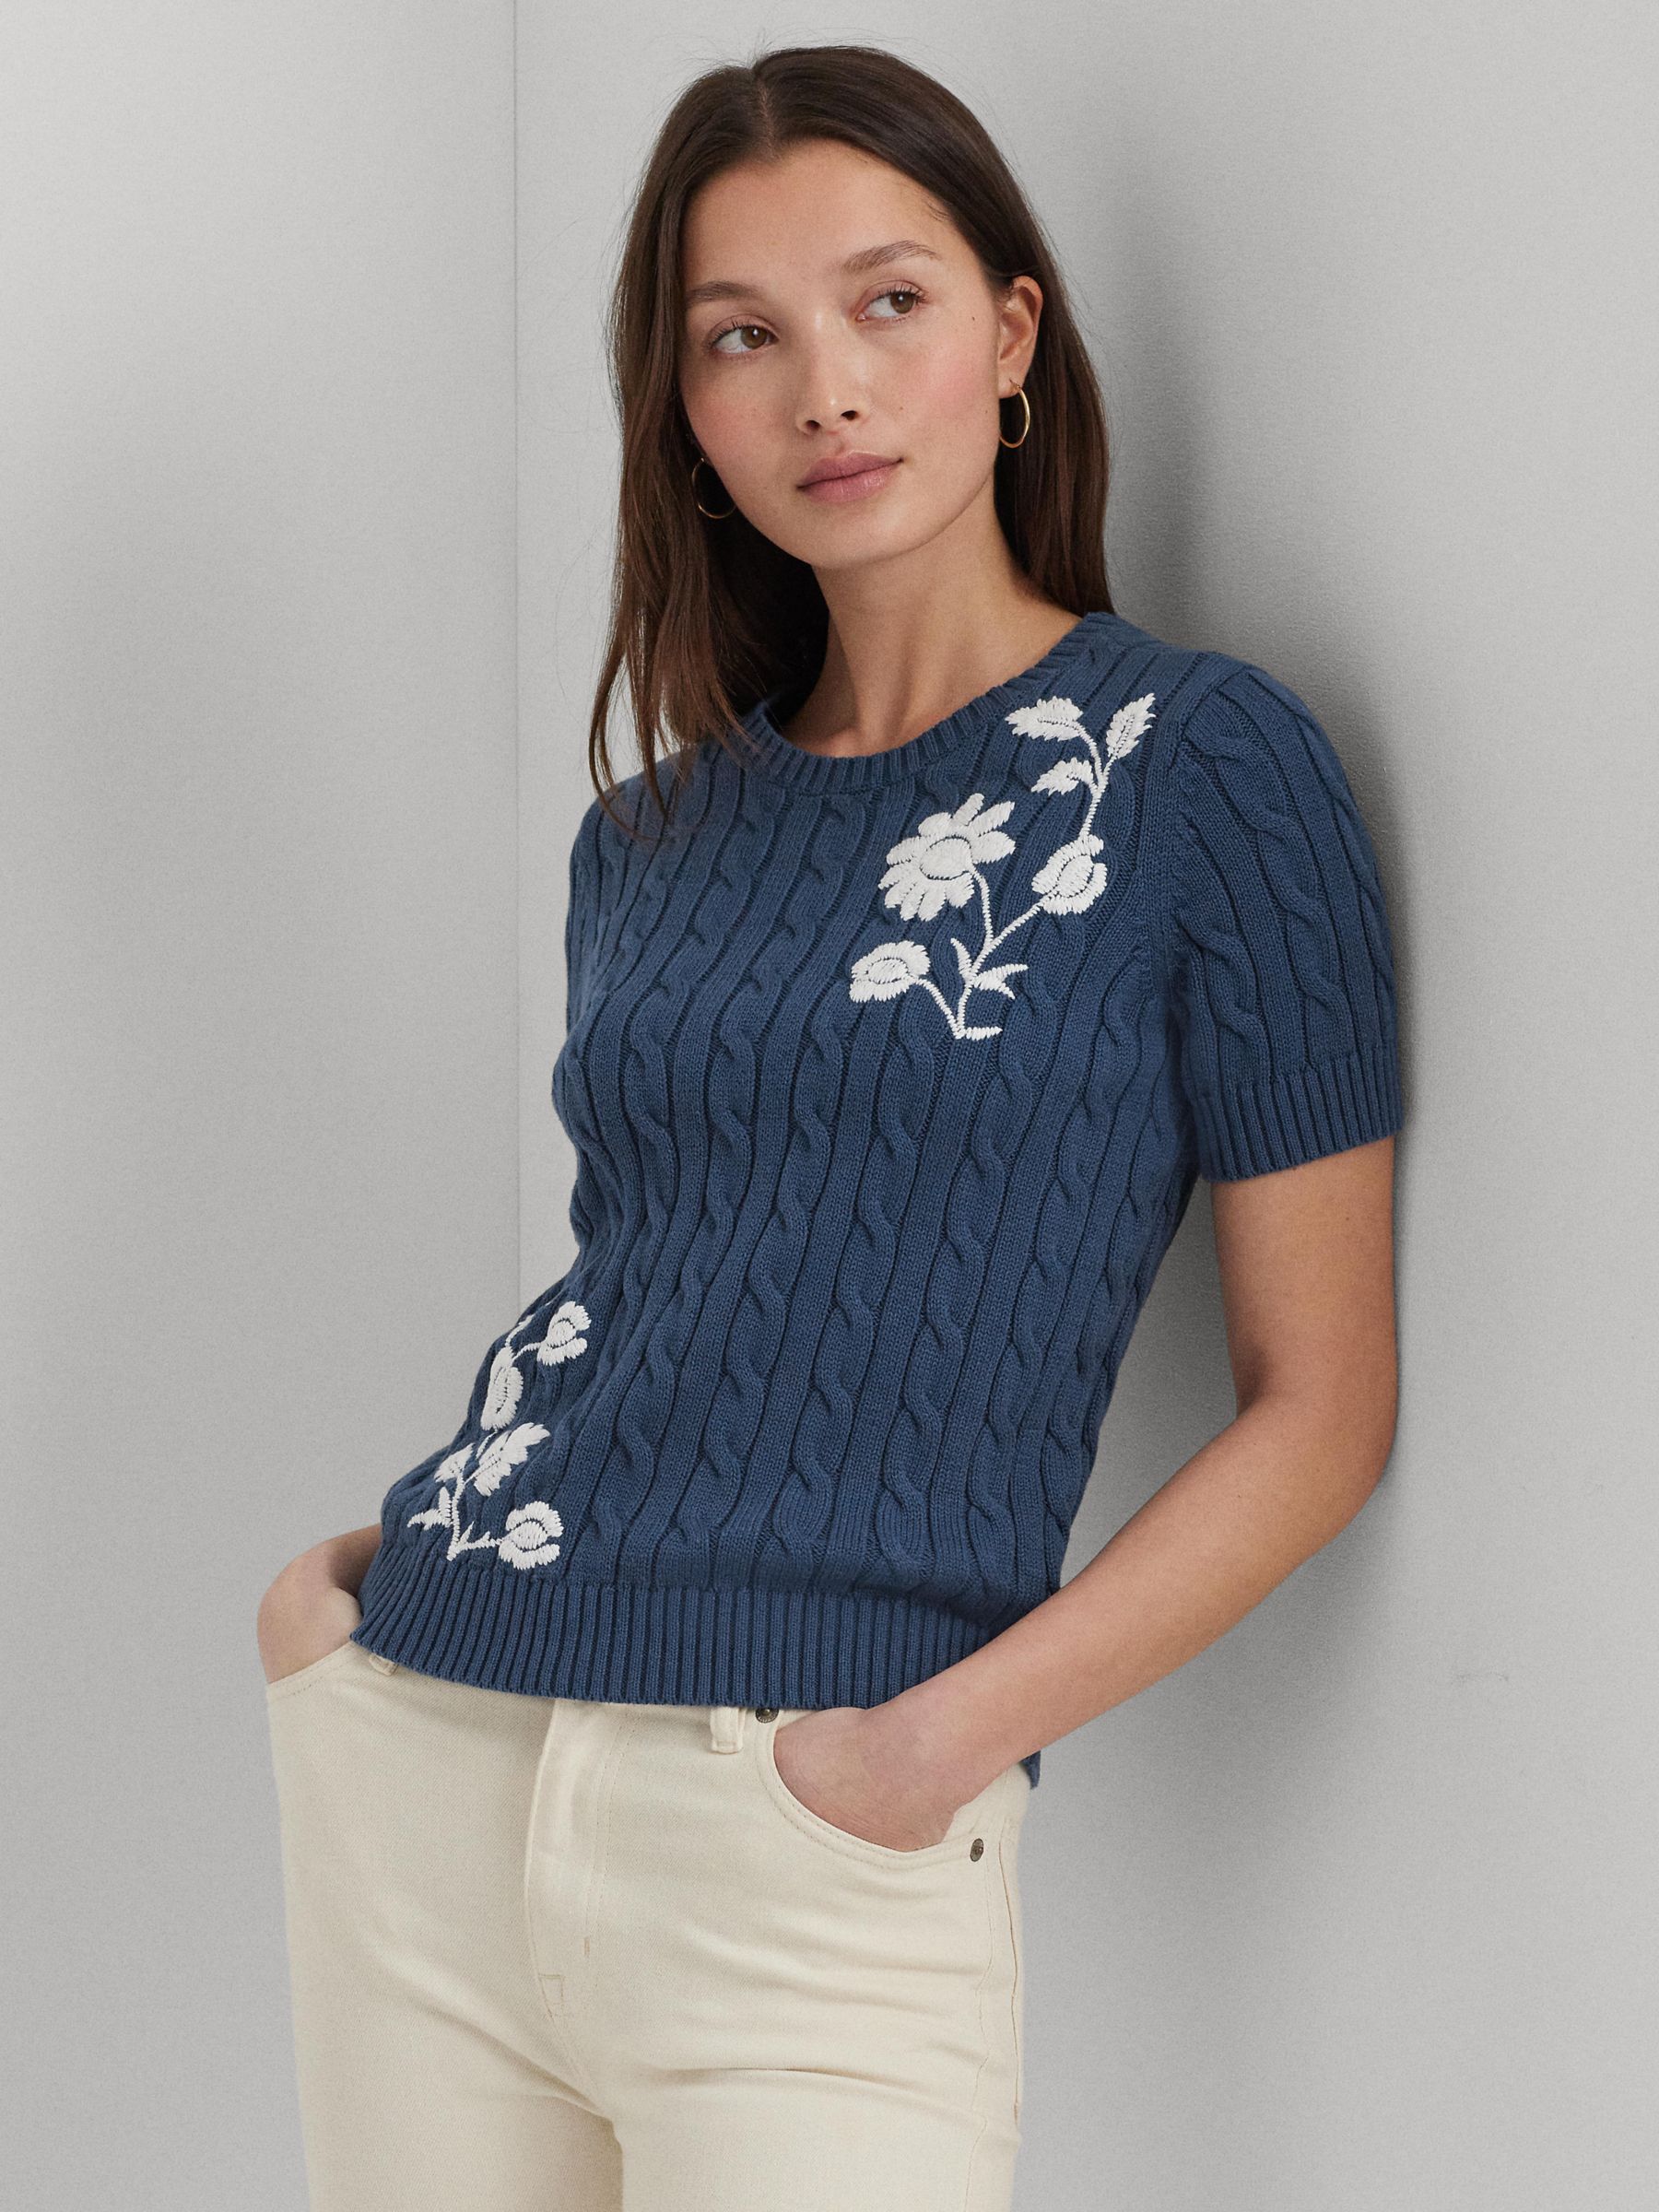 Buy Lauren Ralph Lauren Tazsae Embroidered Cable Knit Short Sleeve Jumper, Blue Online at johnlewis.com